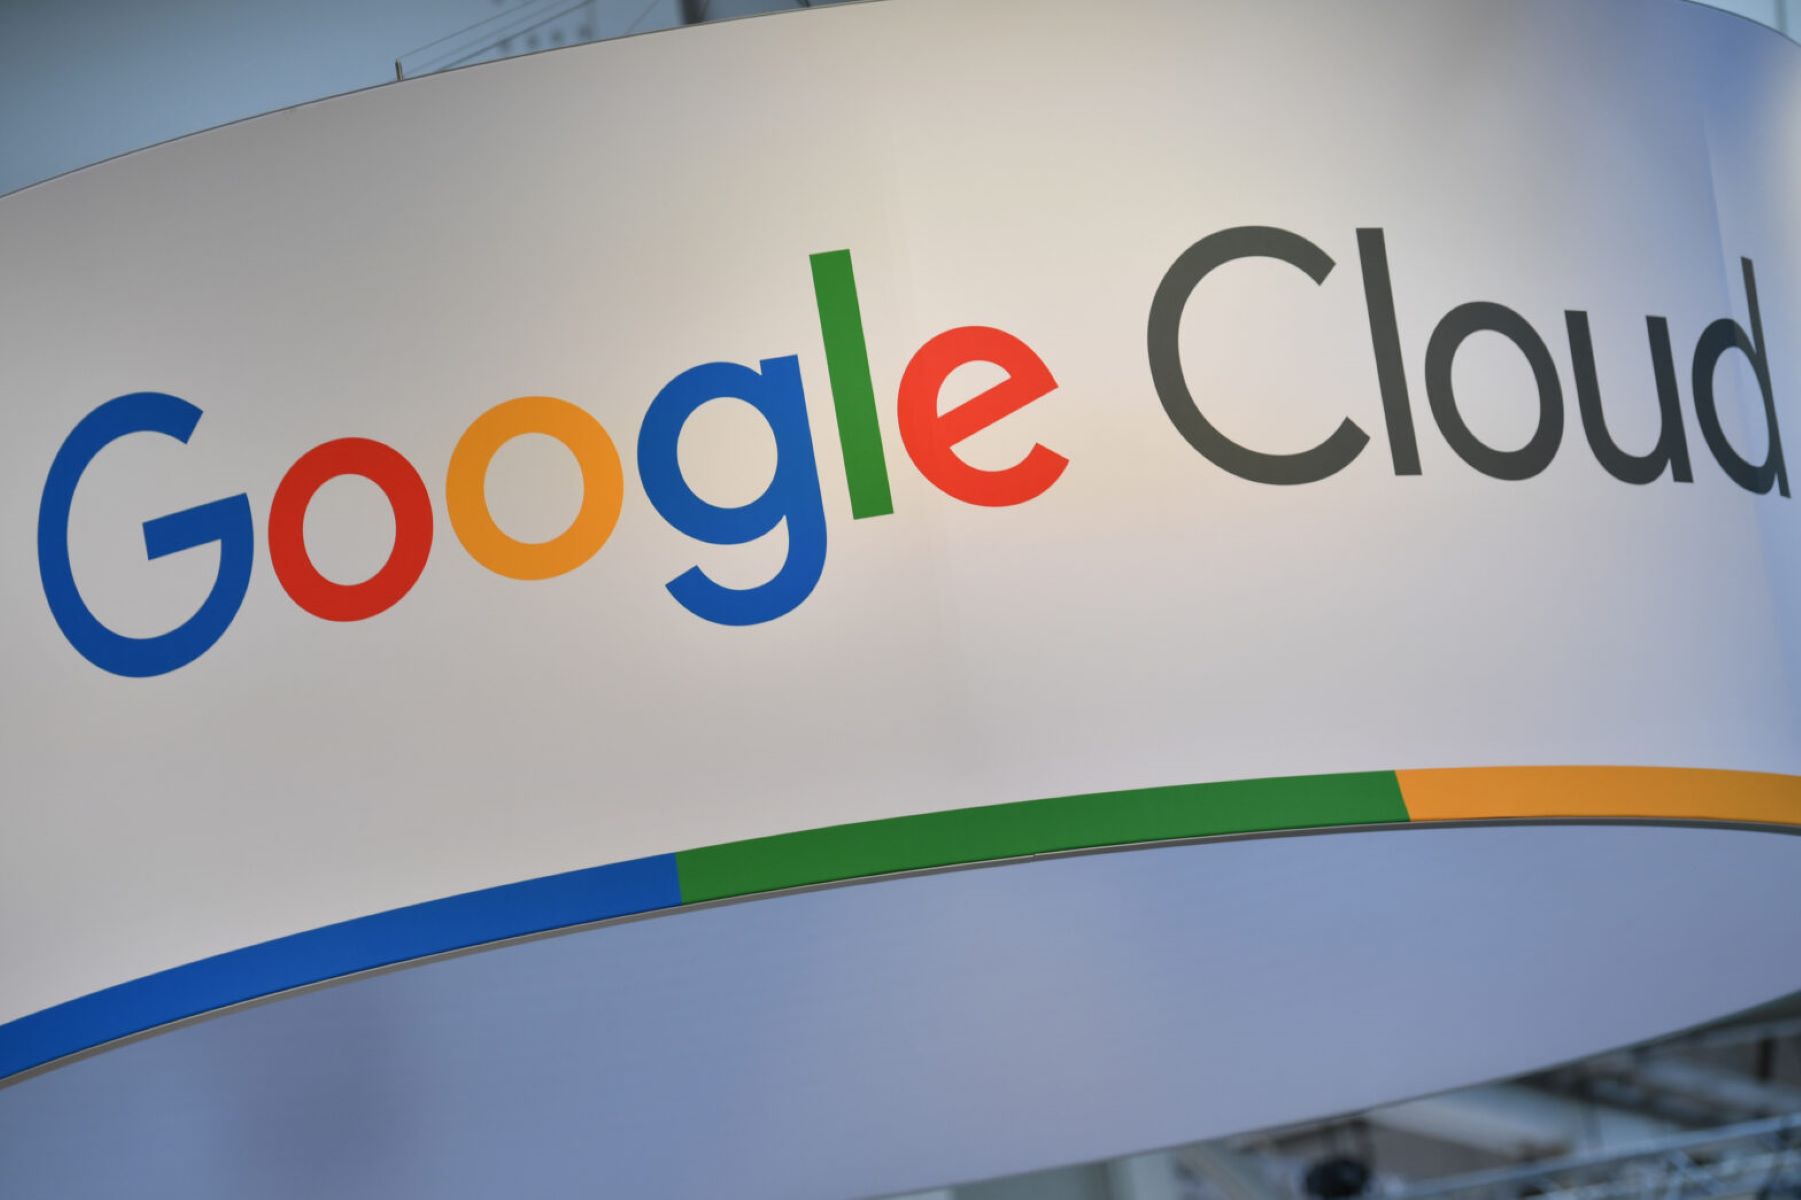 Google Cloud Announces New Generation Of Custom TPUs